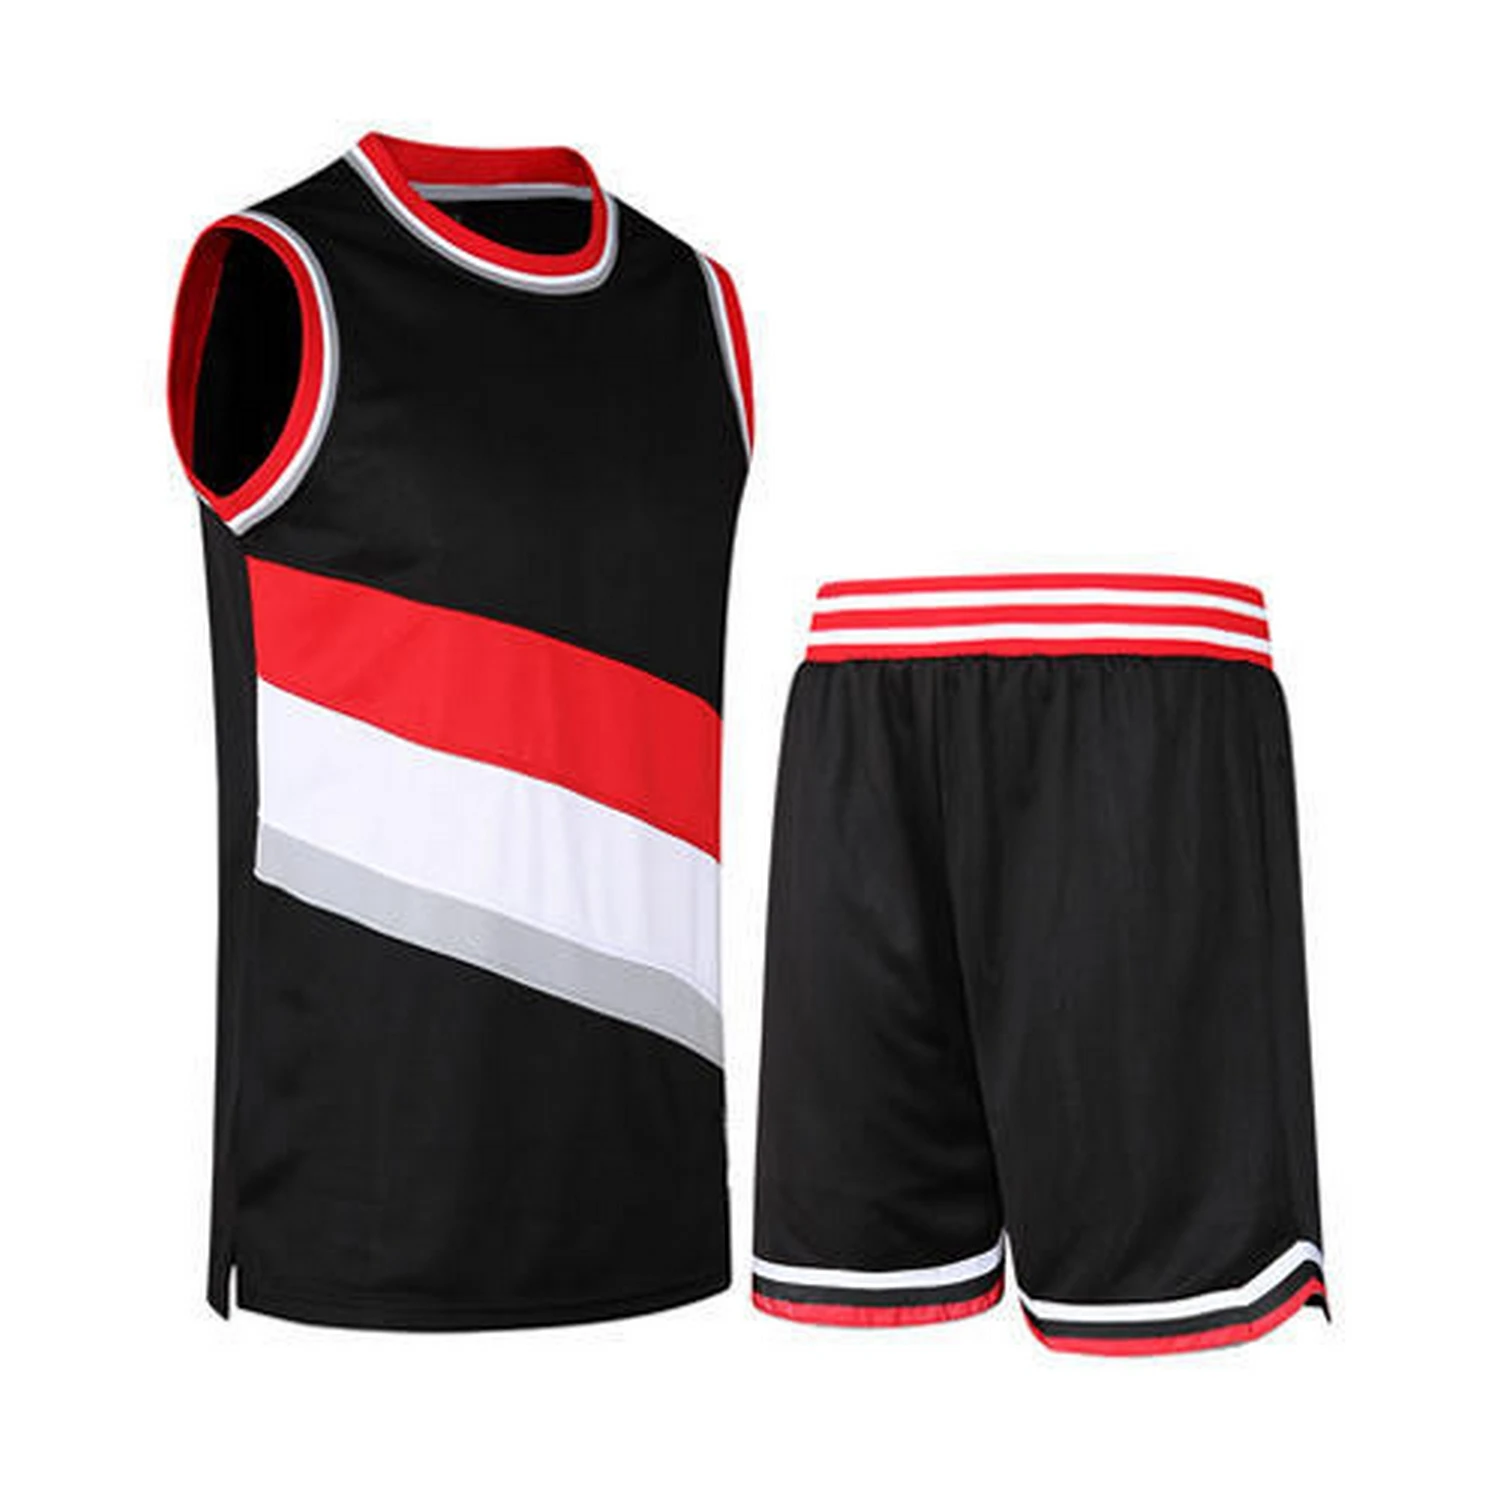 Basketball jersey outfit, Sports jersey design, Sports uniform design